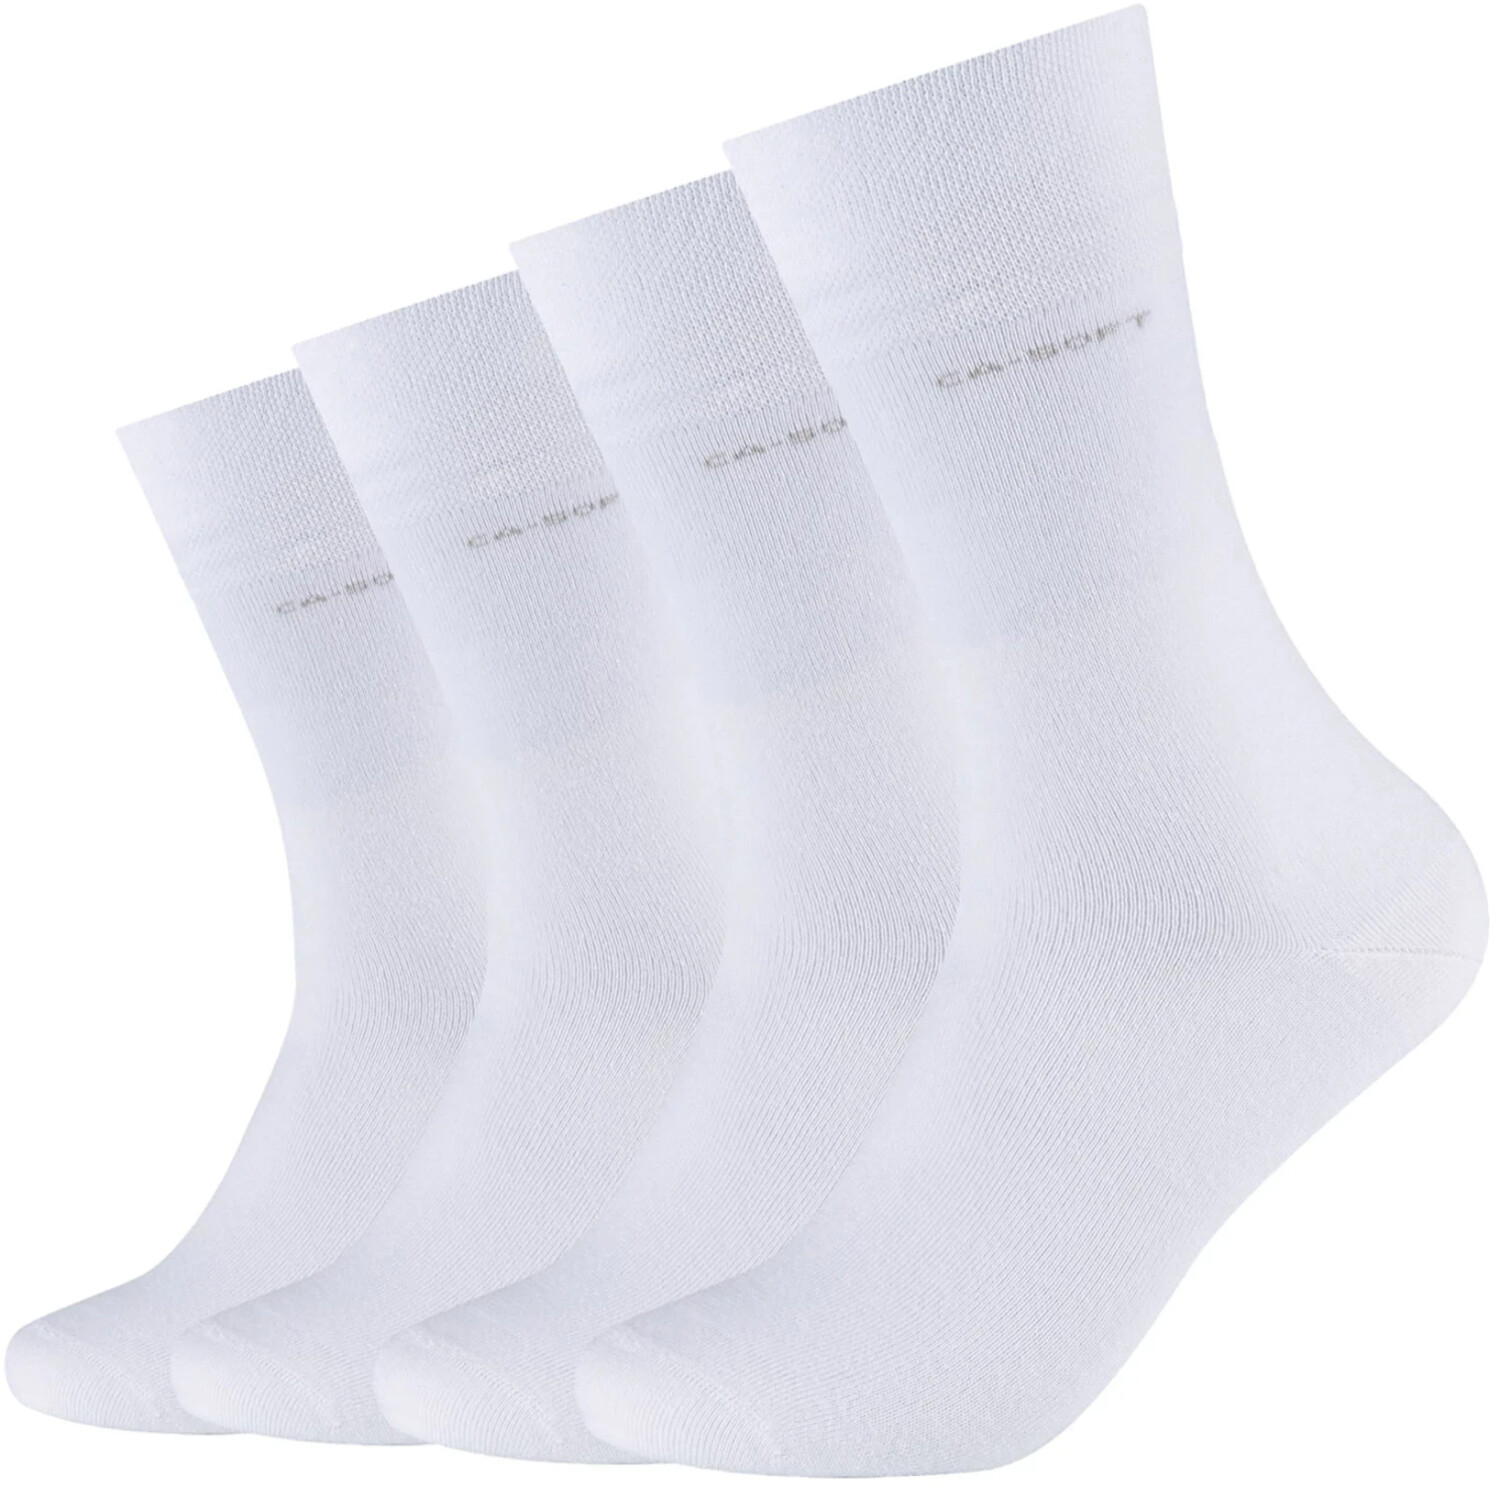 white € Camano ab bei | 12,00 4er-Pack (3642000) Socken ca-soft Preisvergleich